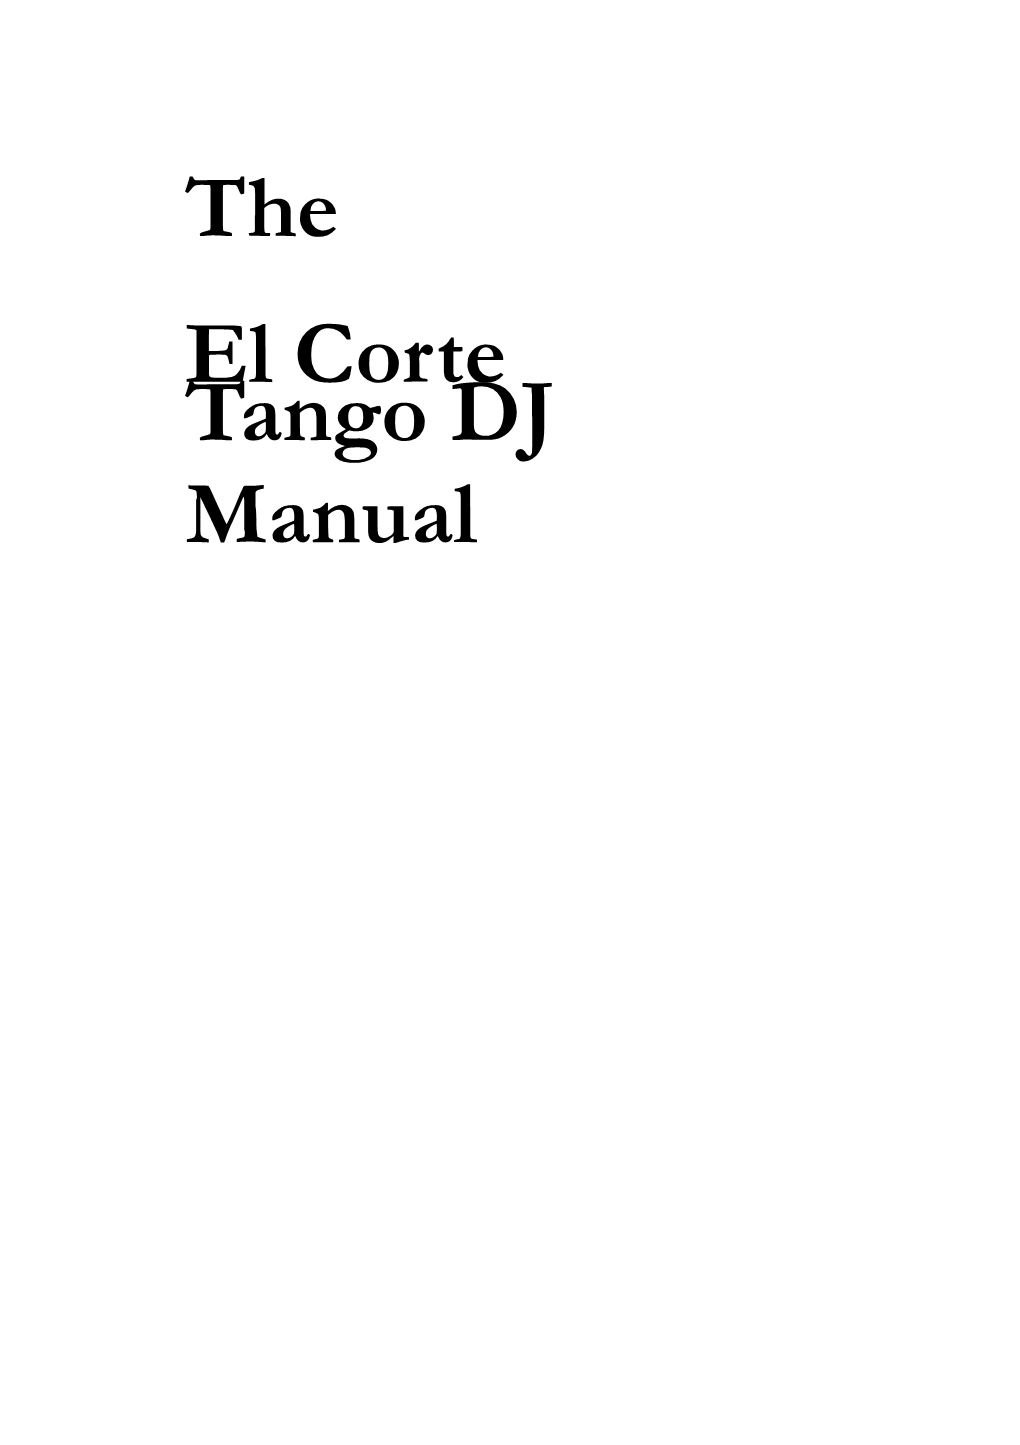 The El Corte Tango DJ Manual